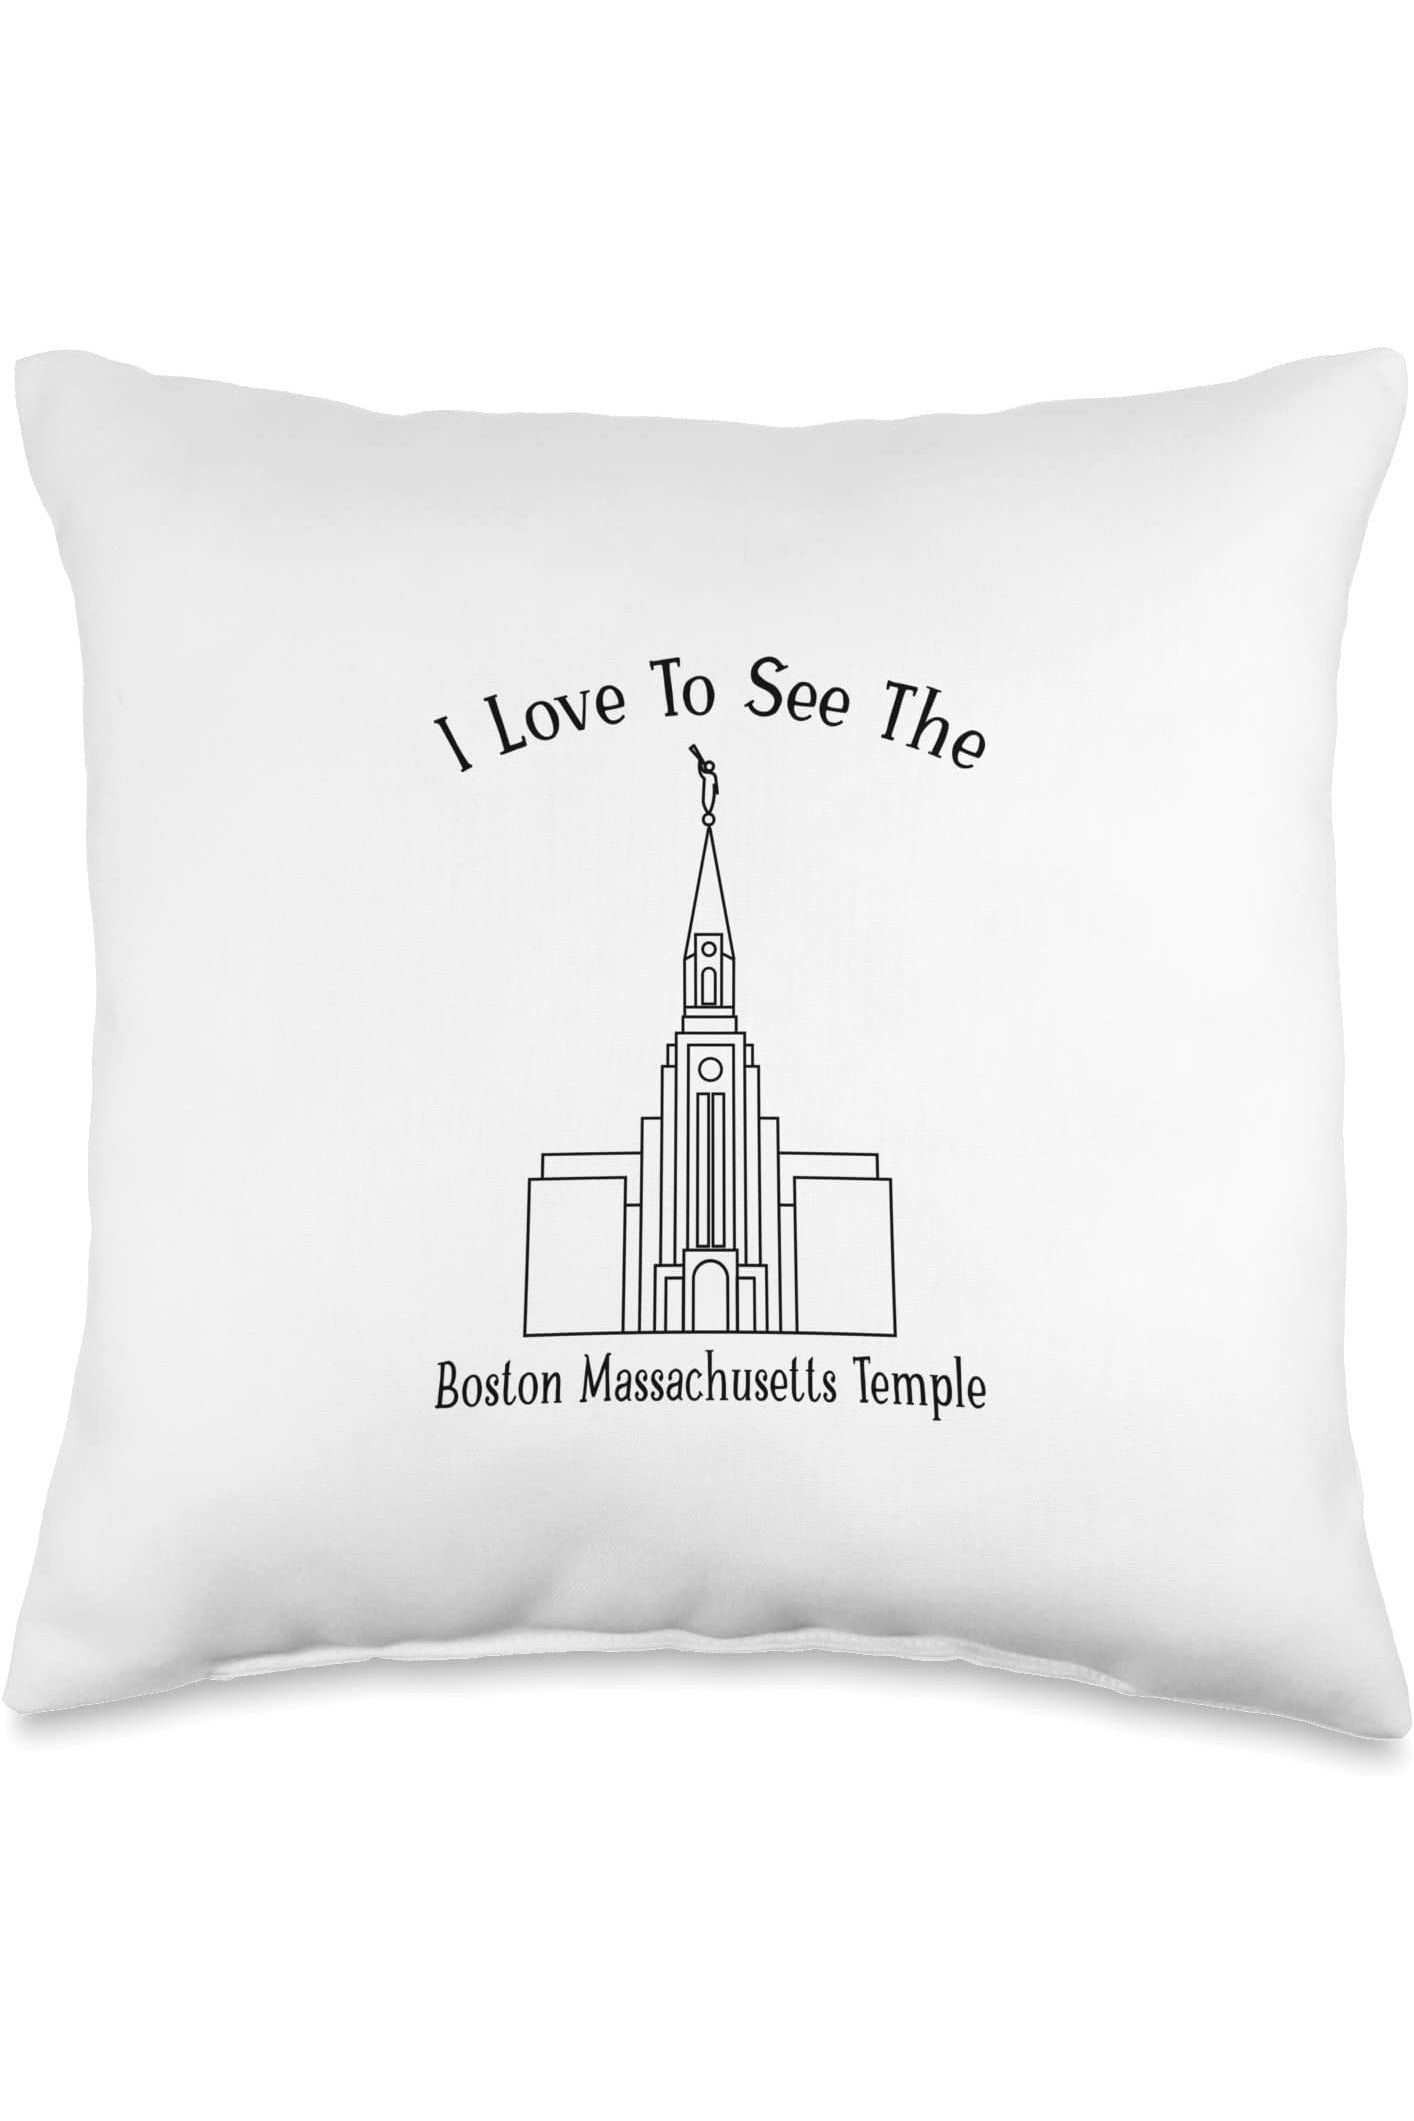 Boston Massachusetts Temple Throw Pillows - Happy Style (English) US